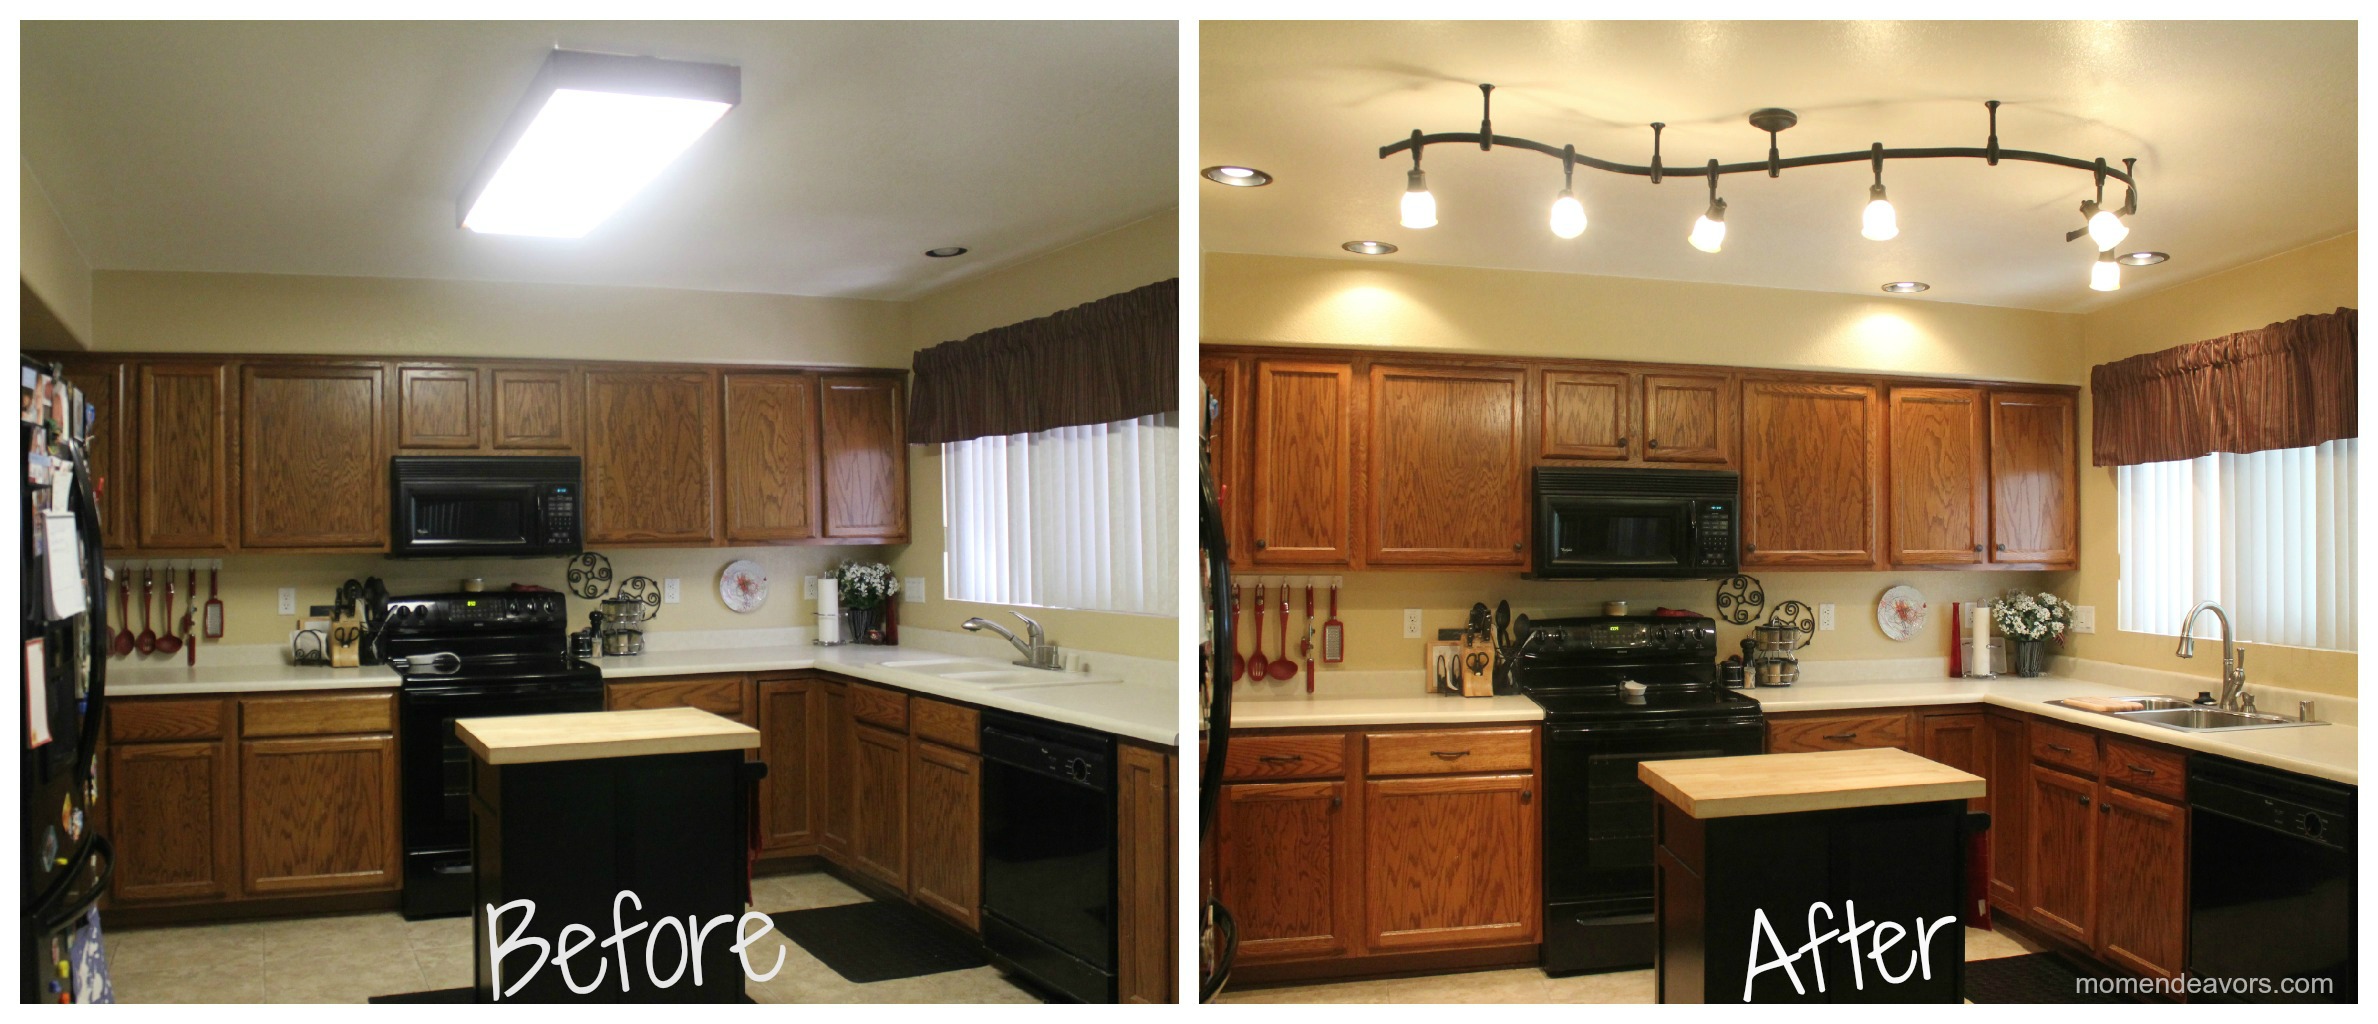 Mini Kitchen Remodel – New lighting makes a WORLD of 